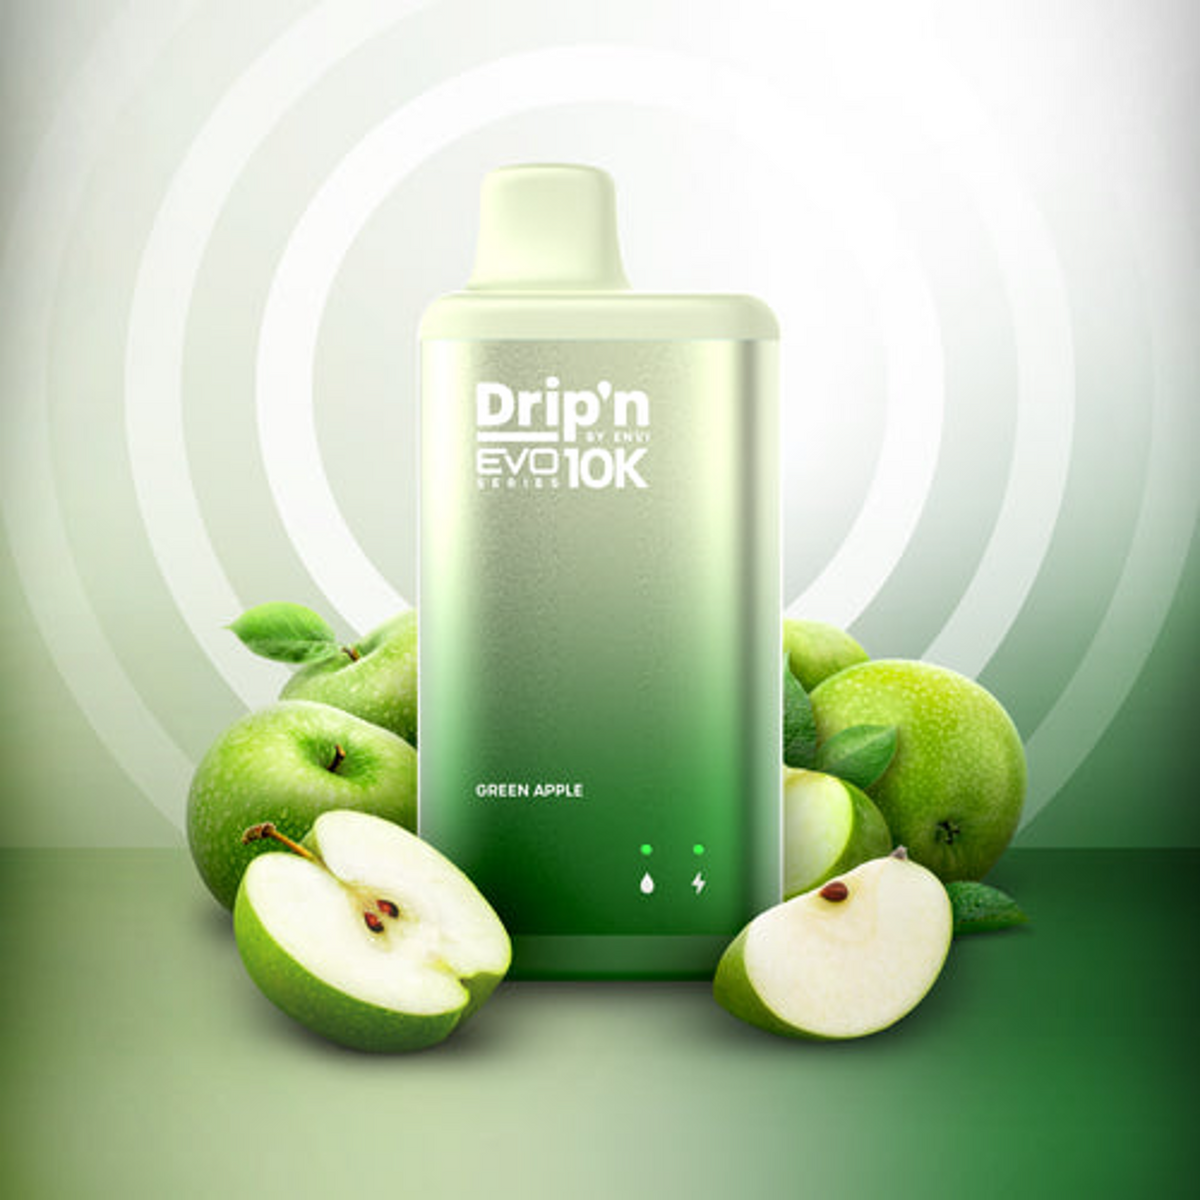 Drip'n EVO 10k- Green Apple